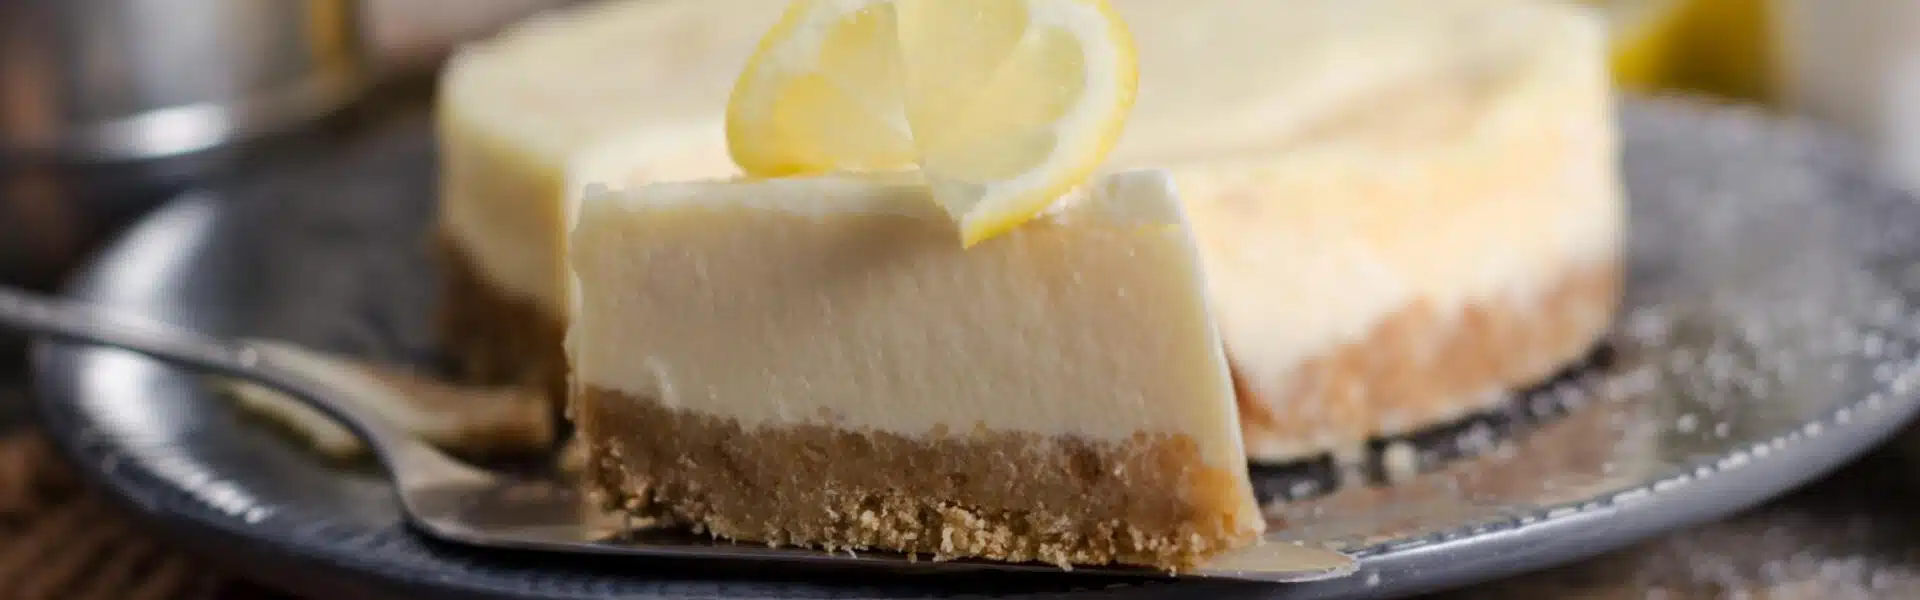 Cheesecake au citron - 3184